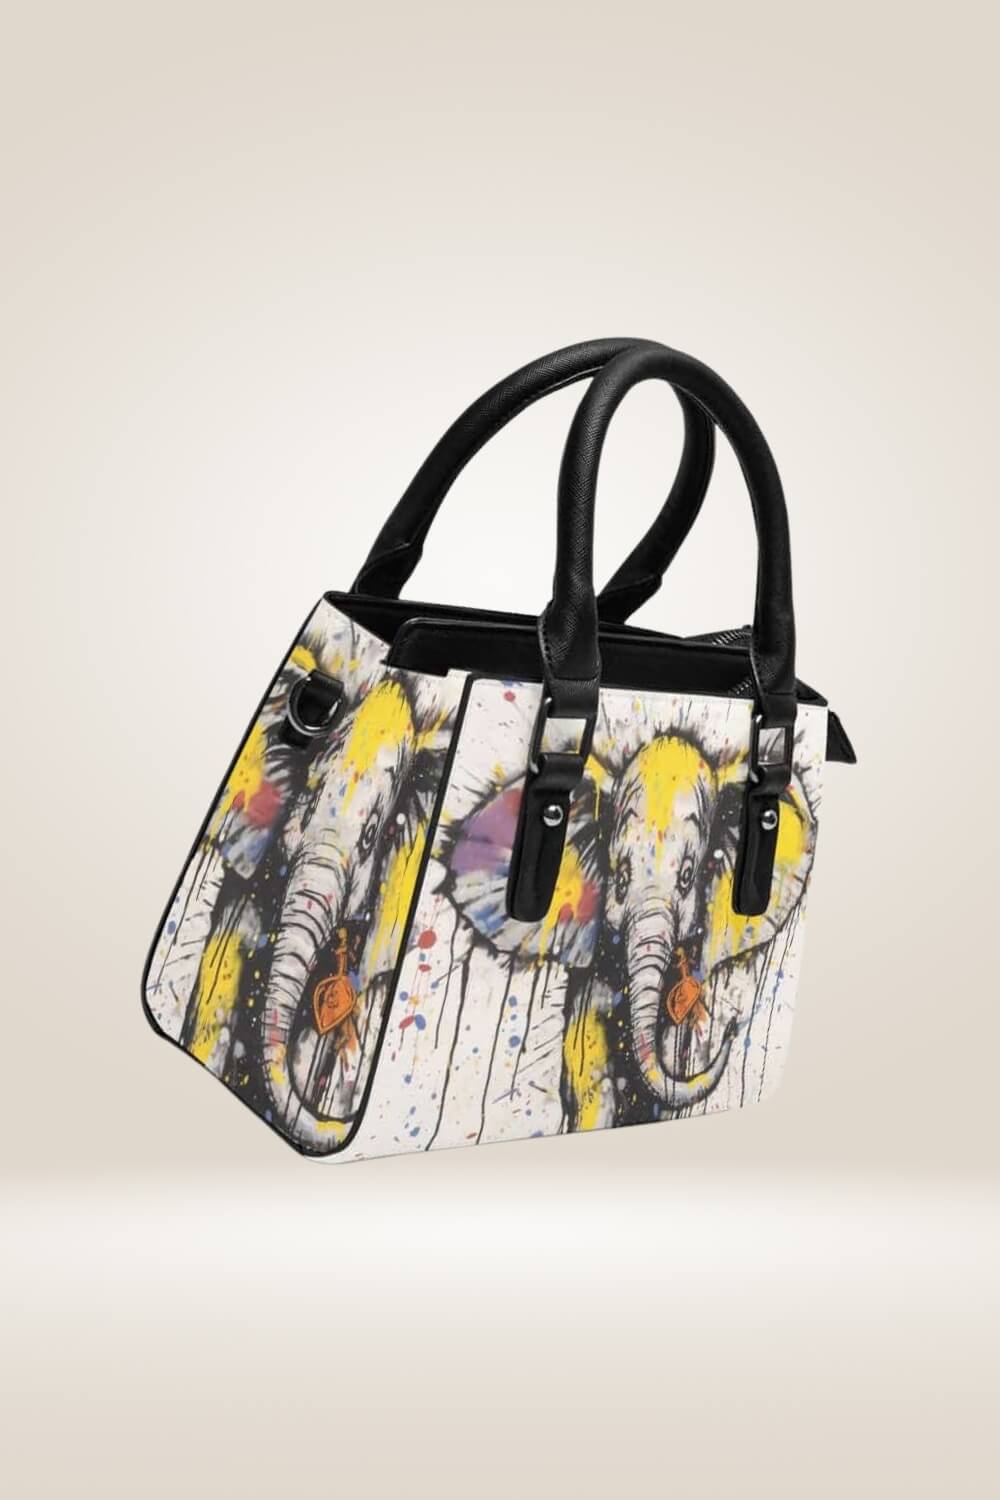 Cartoon Elephant Spray Paint White Satchel Bag - TGC Boutique - Satchel Handbag